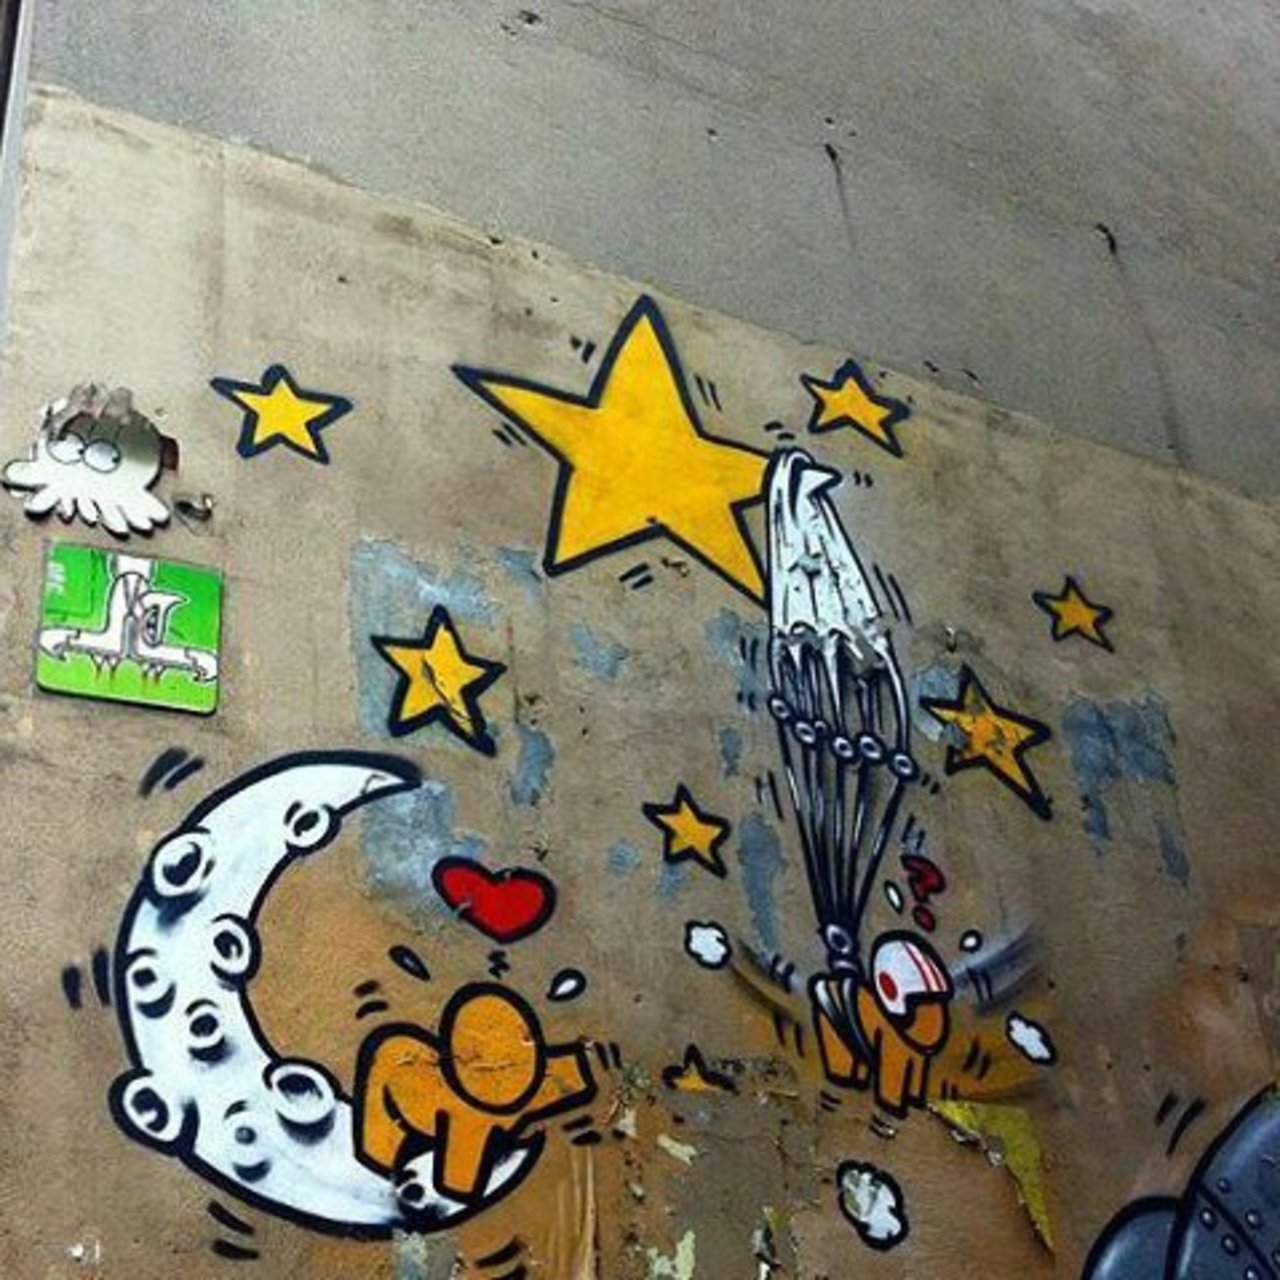 RT @StArtEverywhere: #streetart #streetarteverywhere #streetshot #graffitiart #graffiti #arturbain #urbanart  #mur #mural #wall #wallart… https://t.co/2bxSrzXtVT